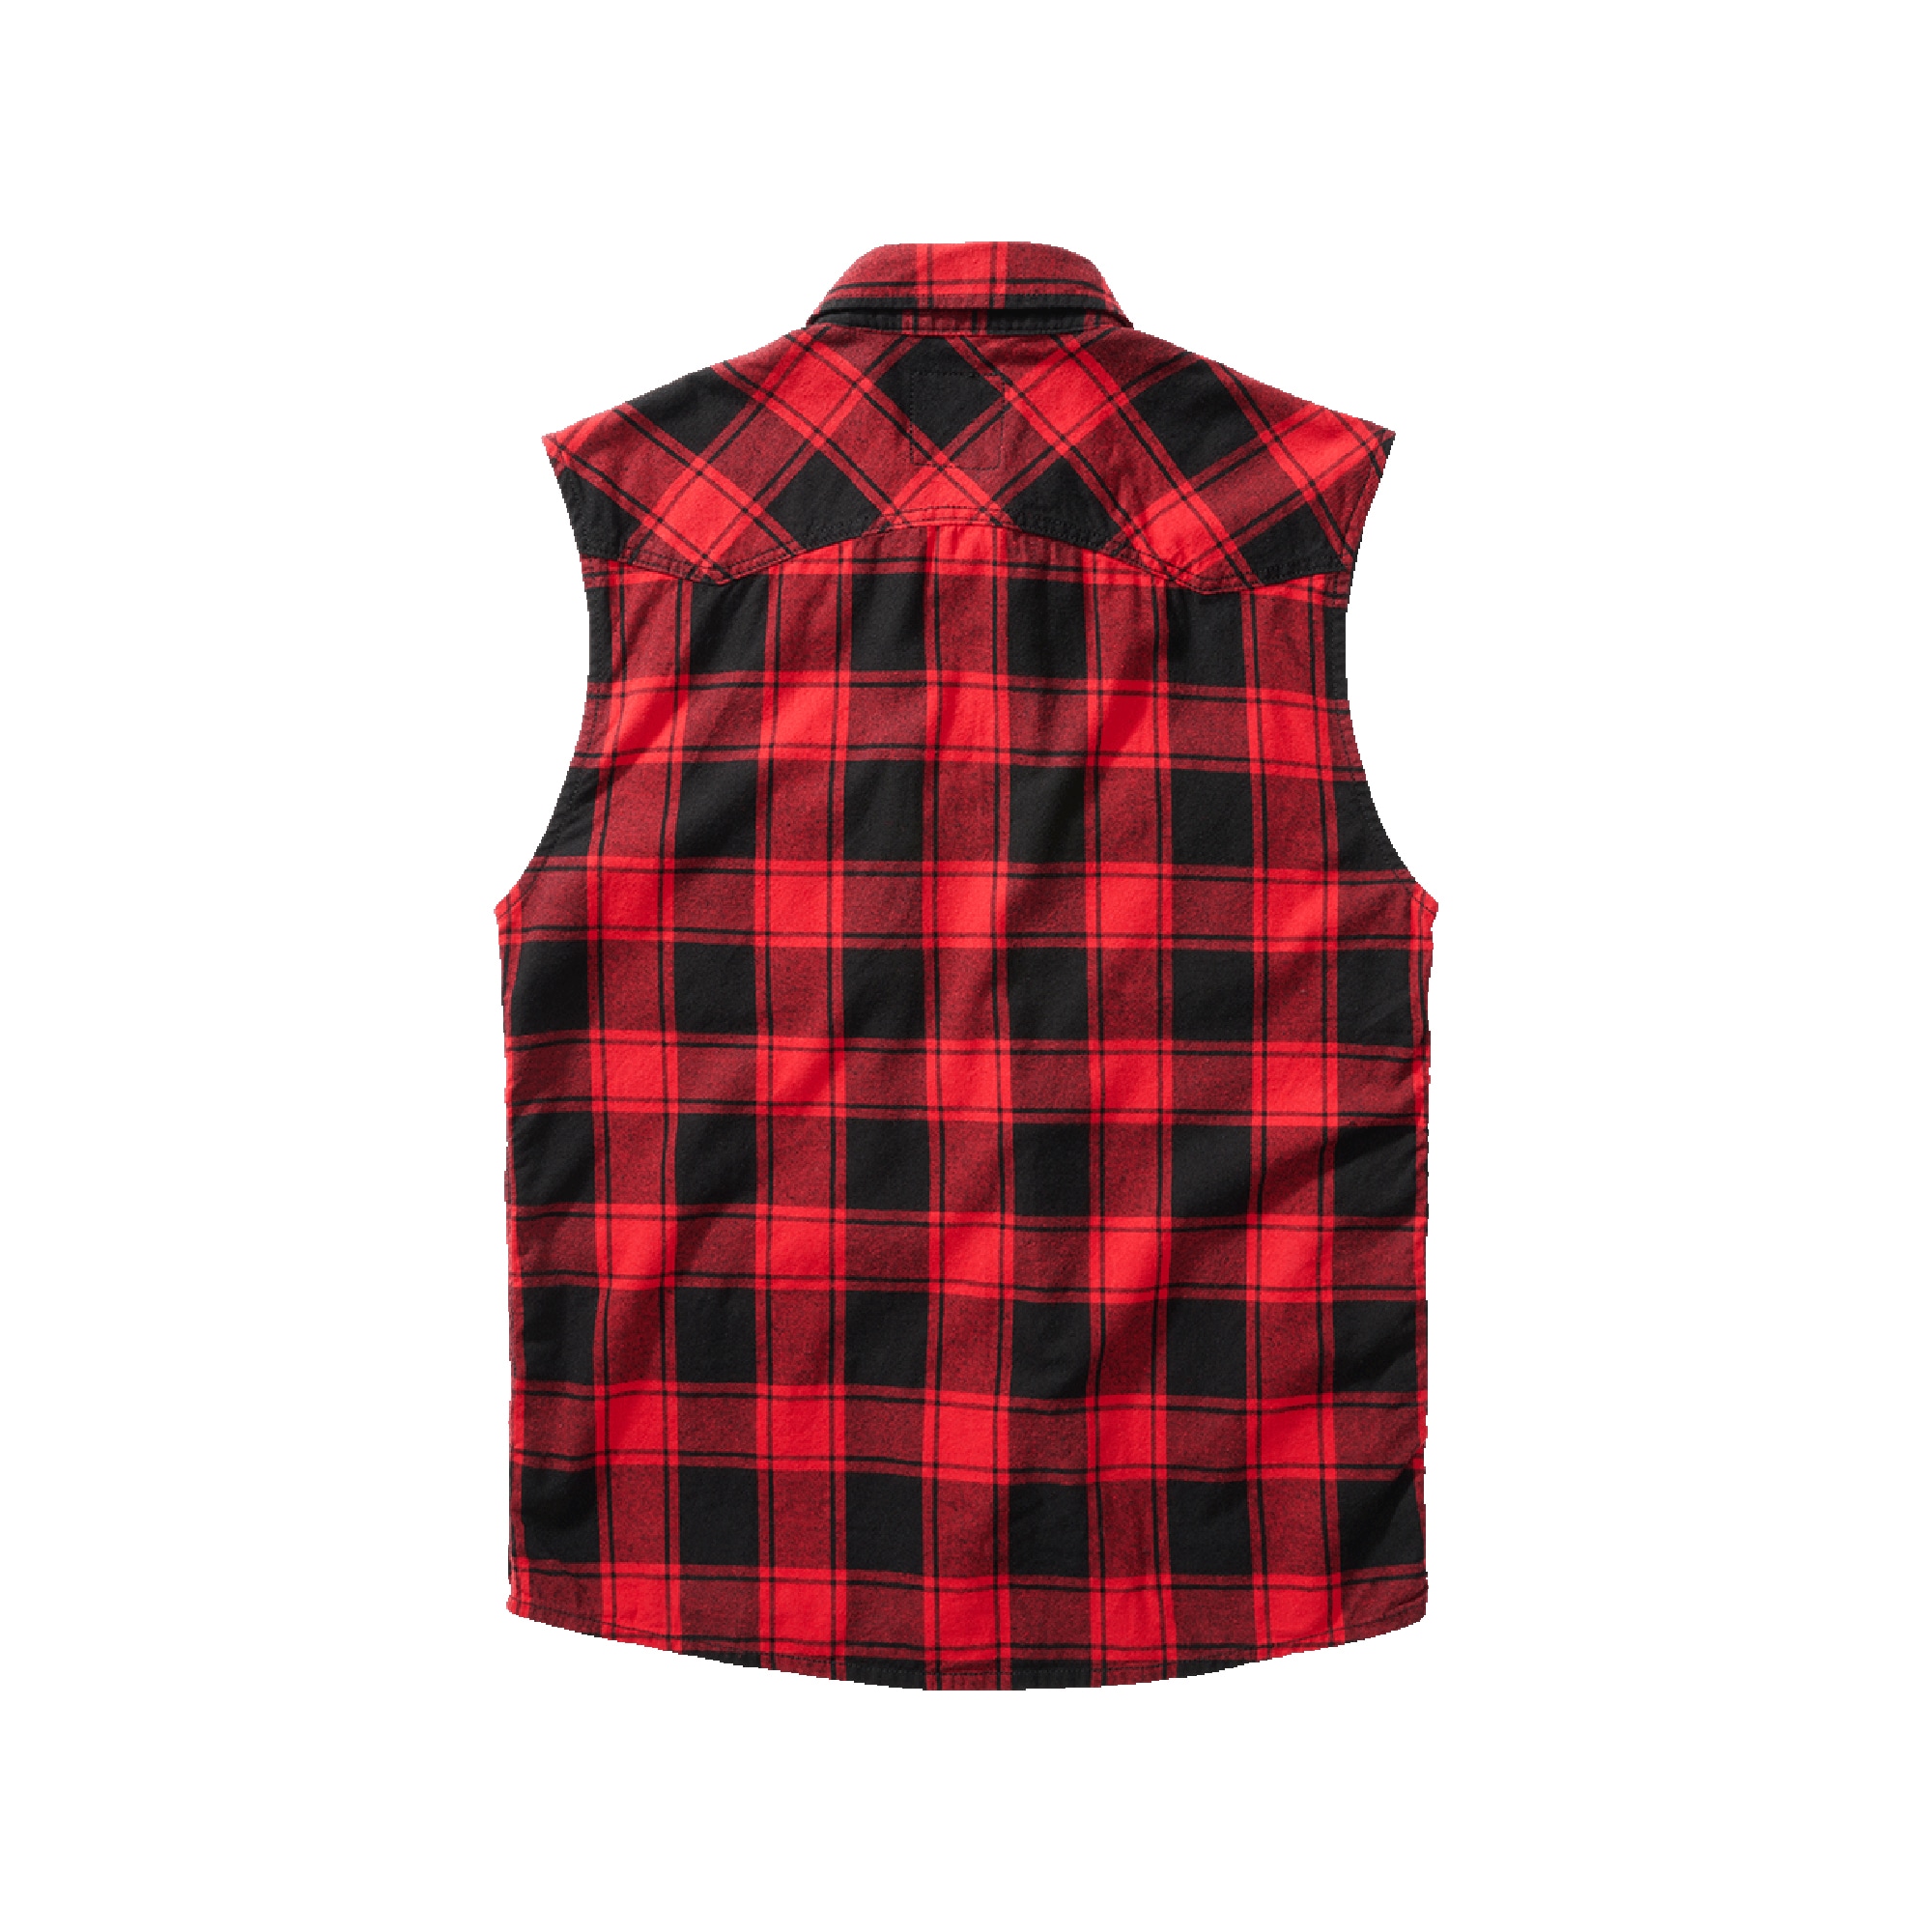 Purchase the Brandit Check Shirt by ASMC Sleeveless red/black